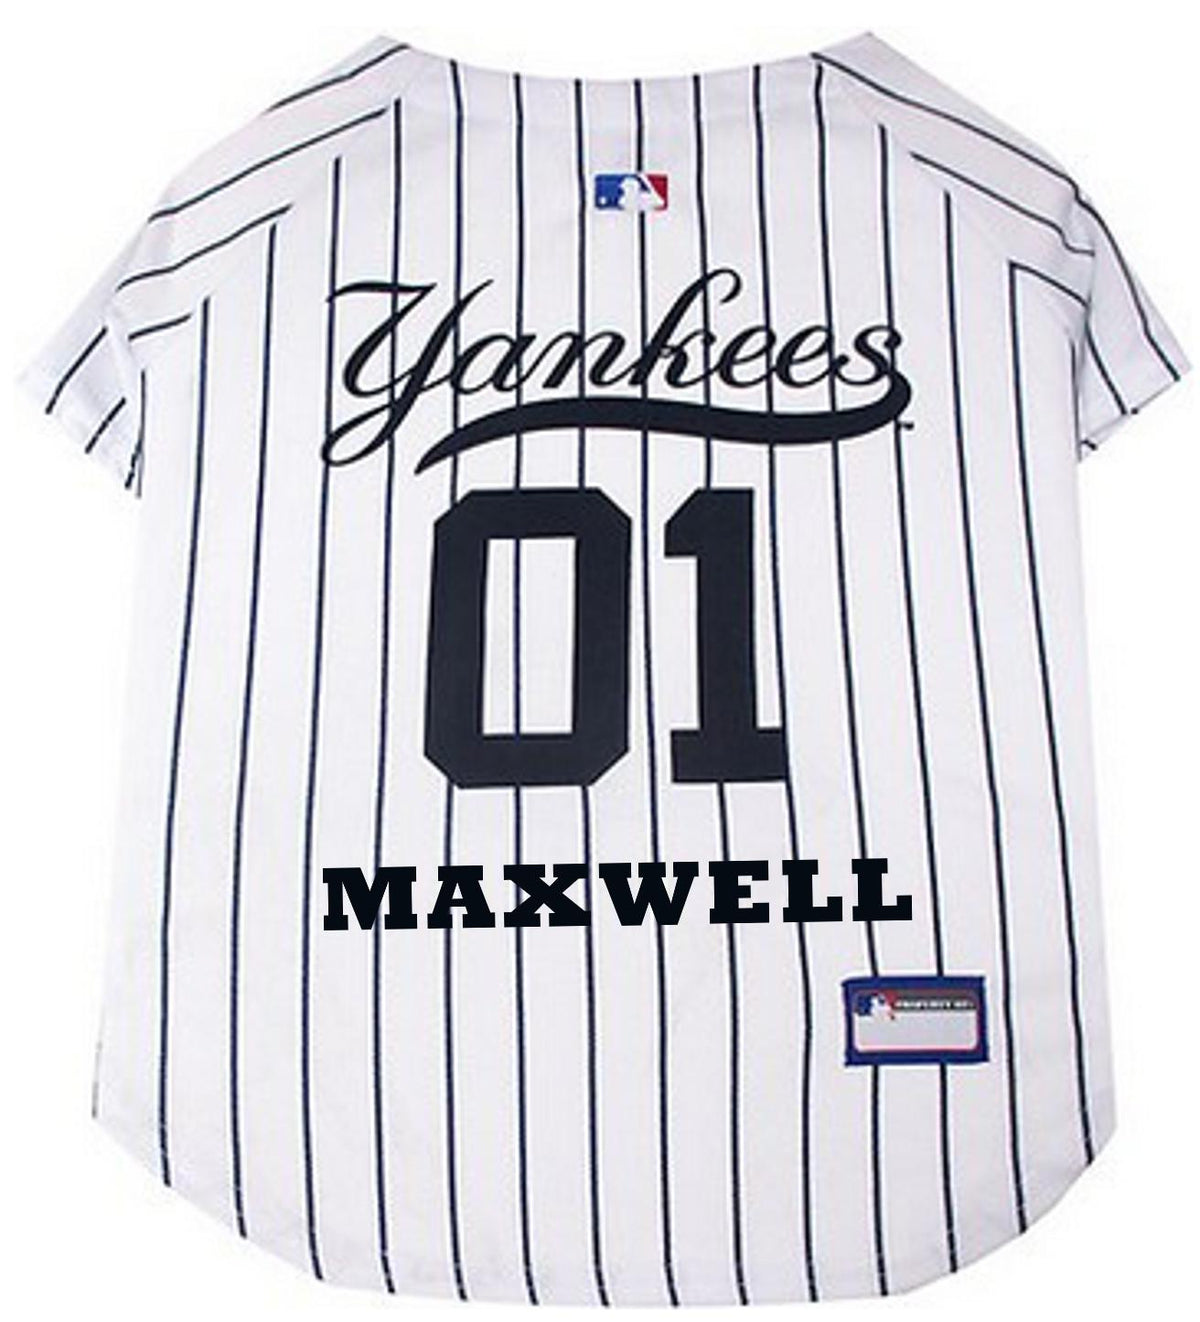 CustomCat New York Yankees Vintage MLB T-Shirt Sport Grey / L